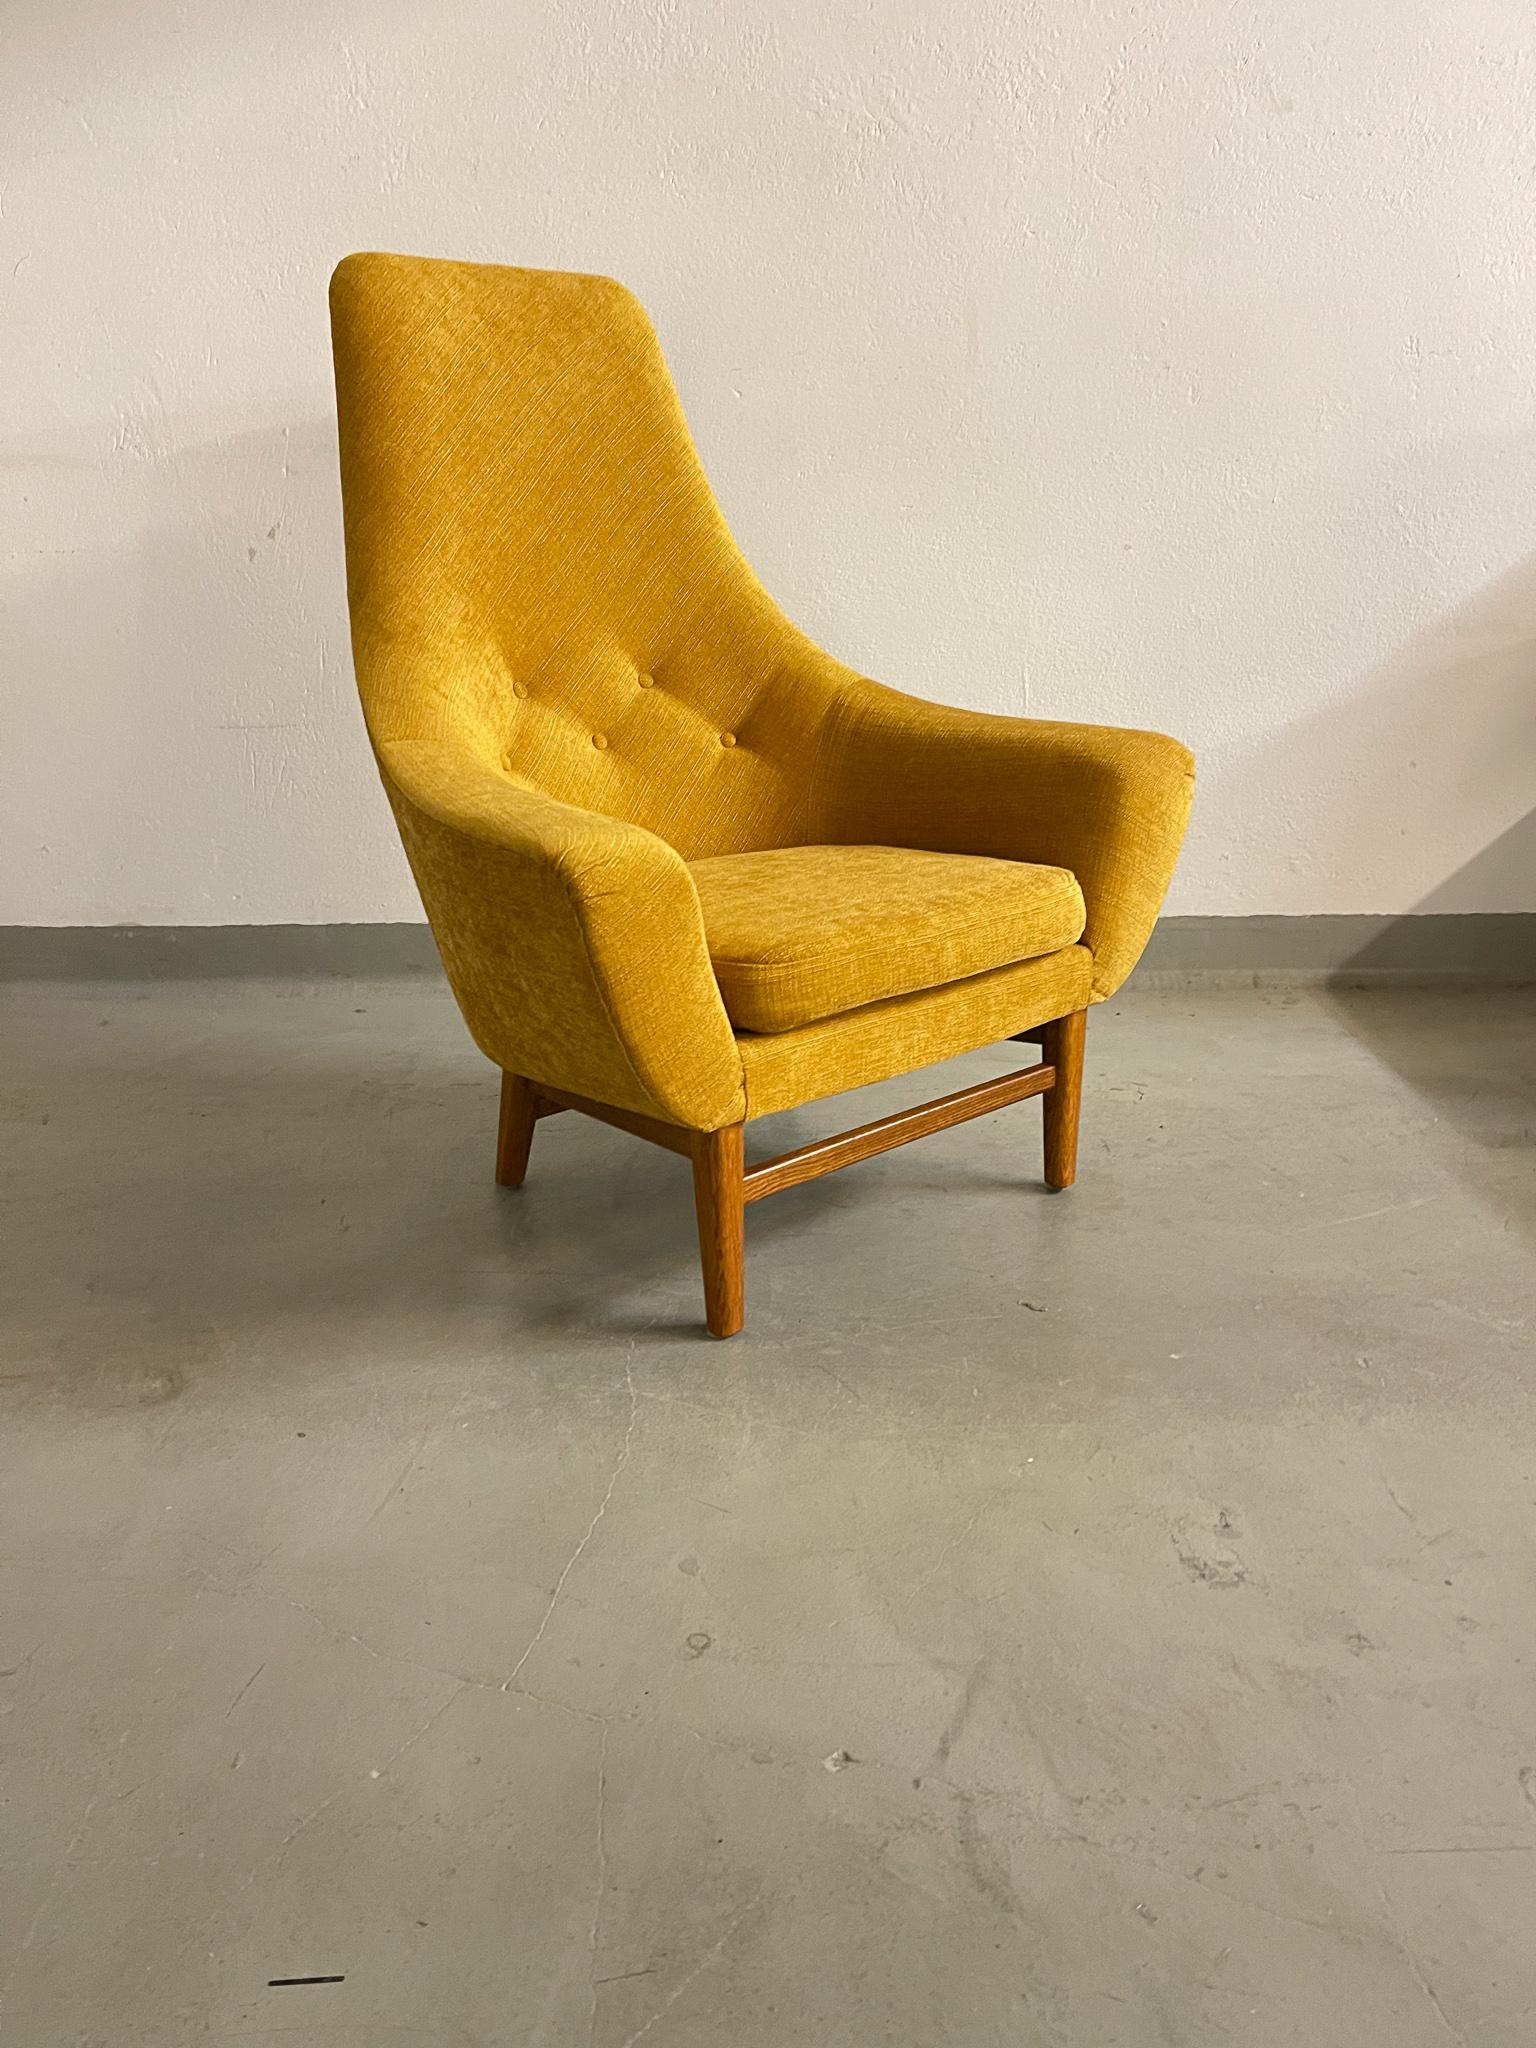 Swedish Midcentury Mustard Colored Lounge Chair S.M. Wincrantz, Sweden